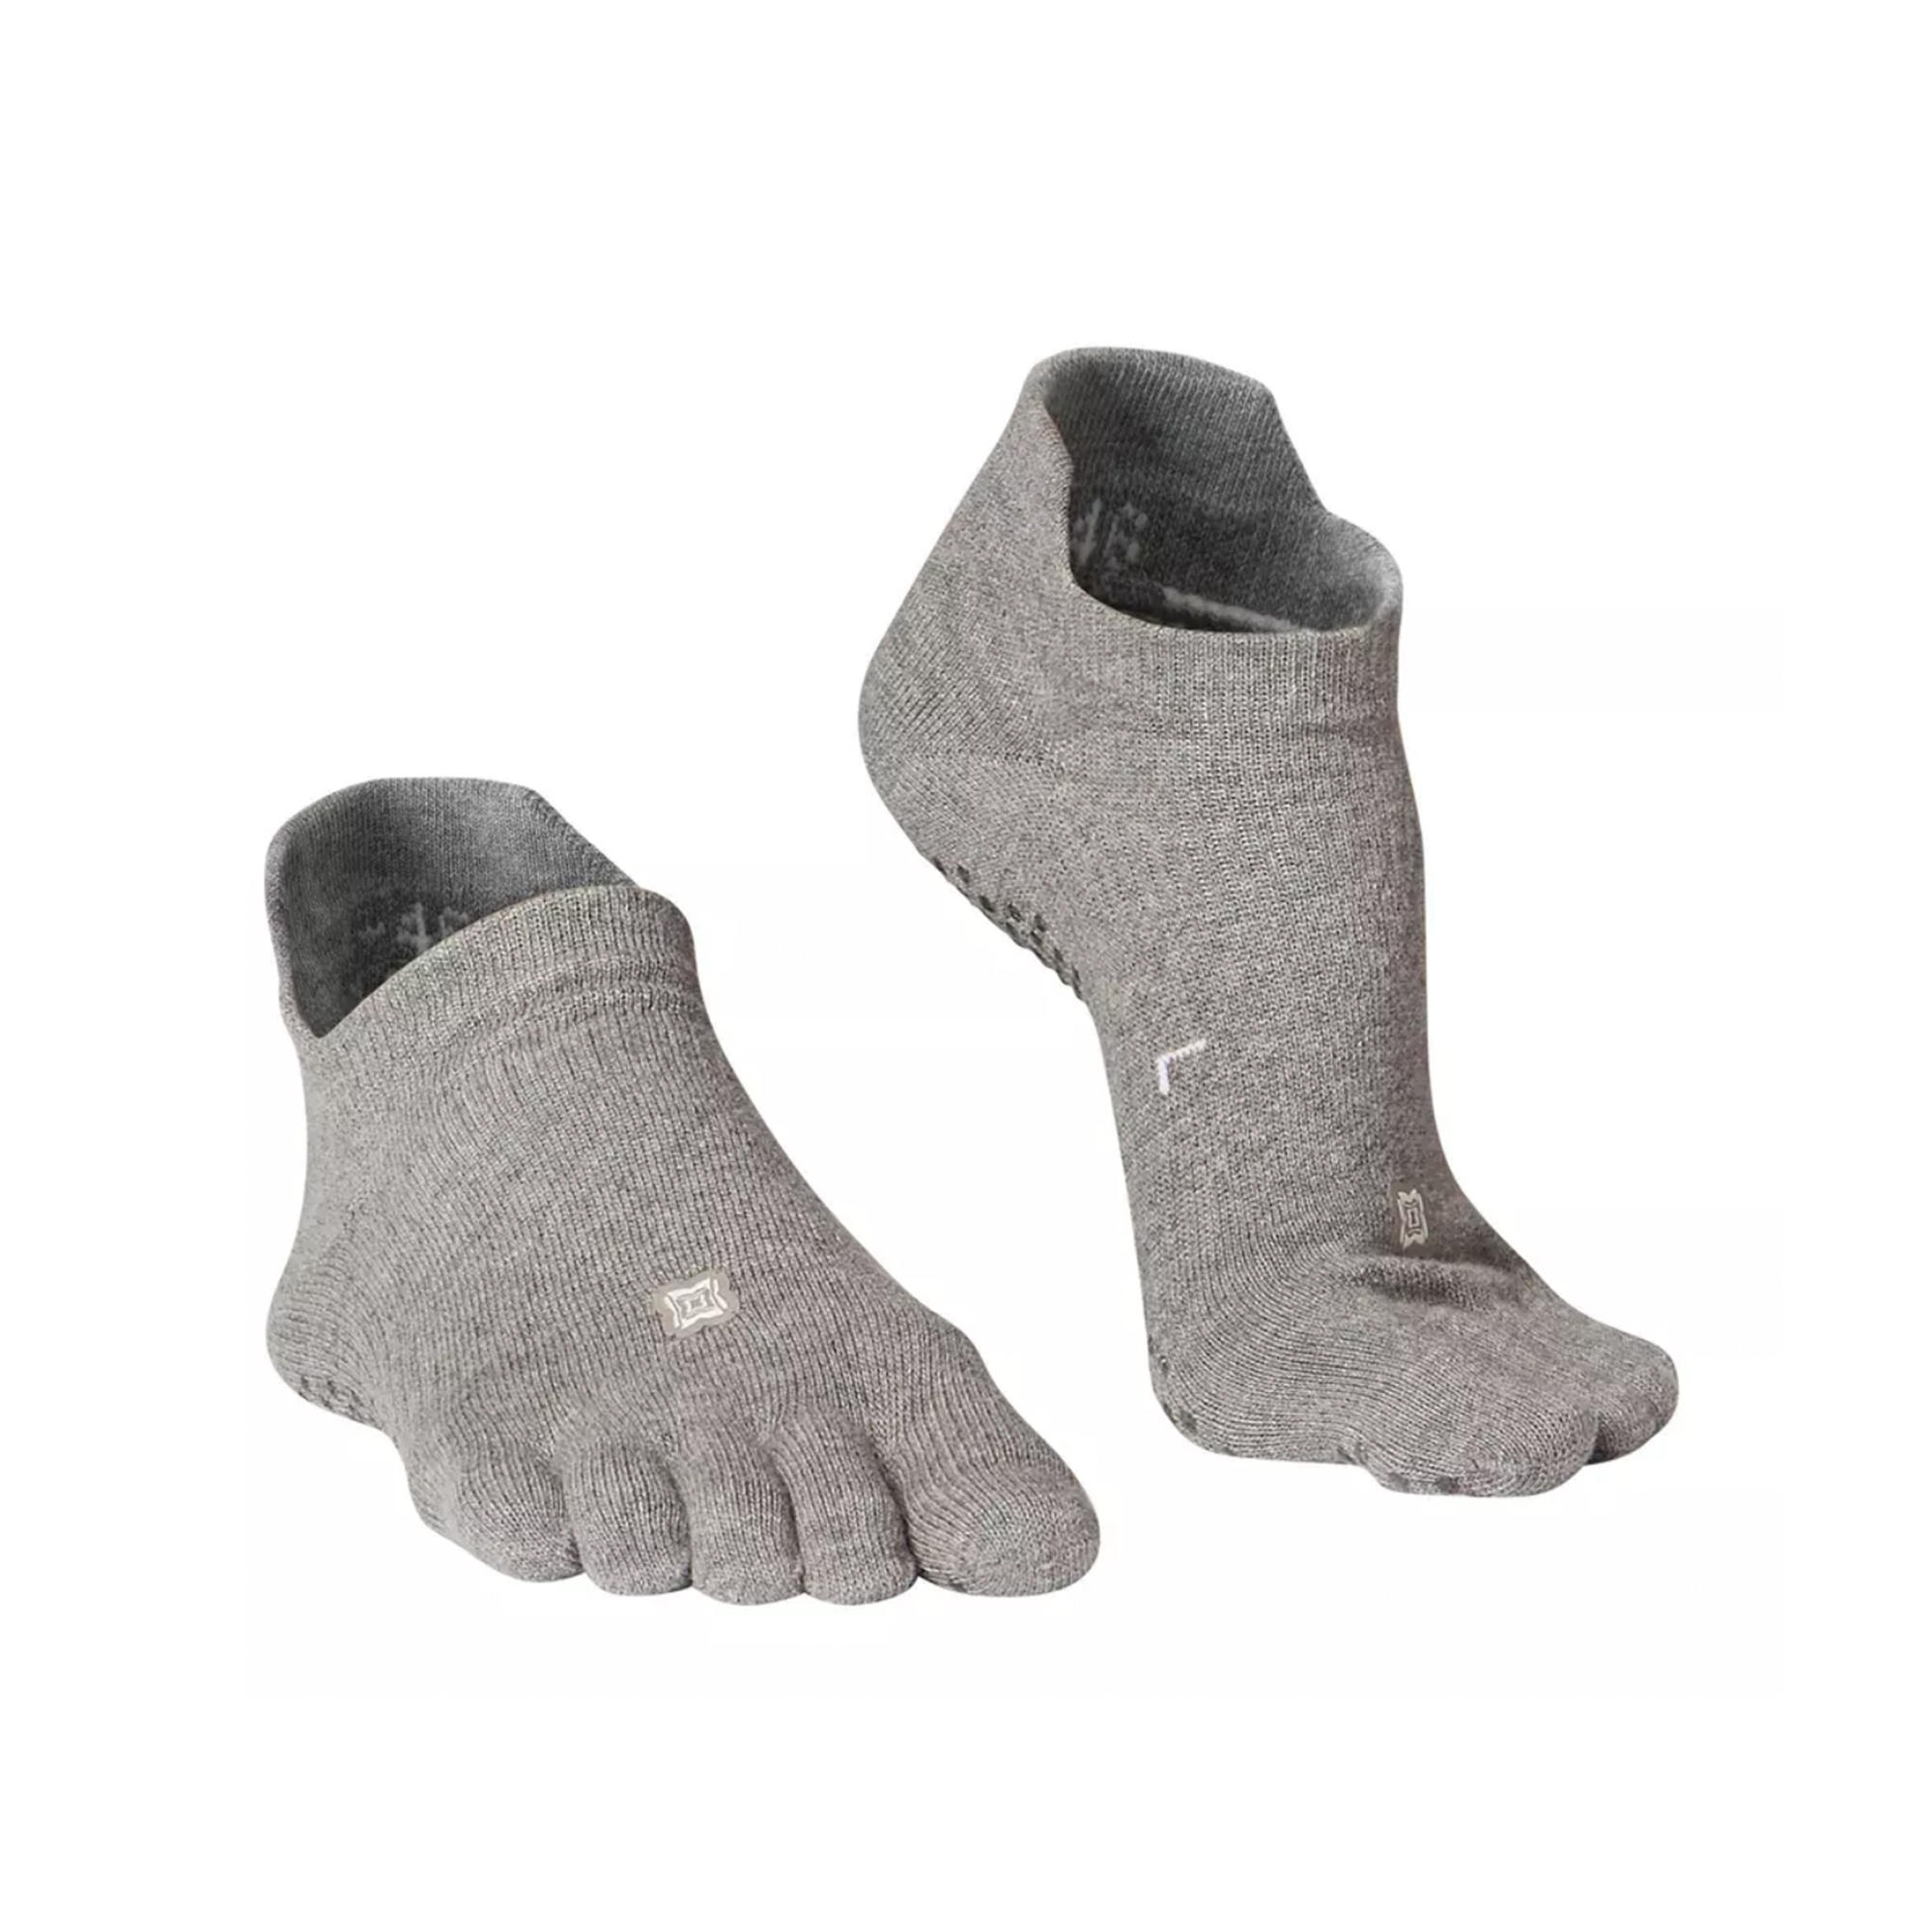 Buy Women's Socks, Gmall Mary Jane Bella Yoga Socks with Grips Non